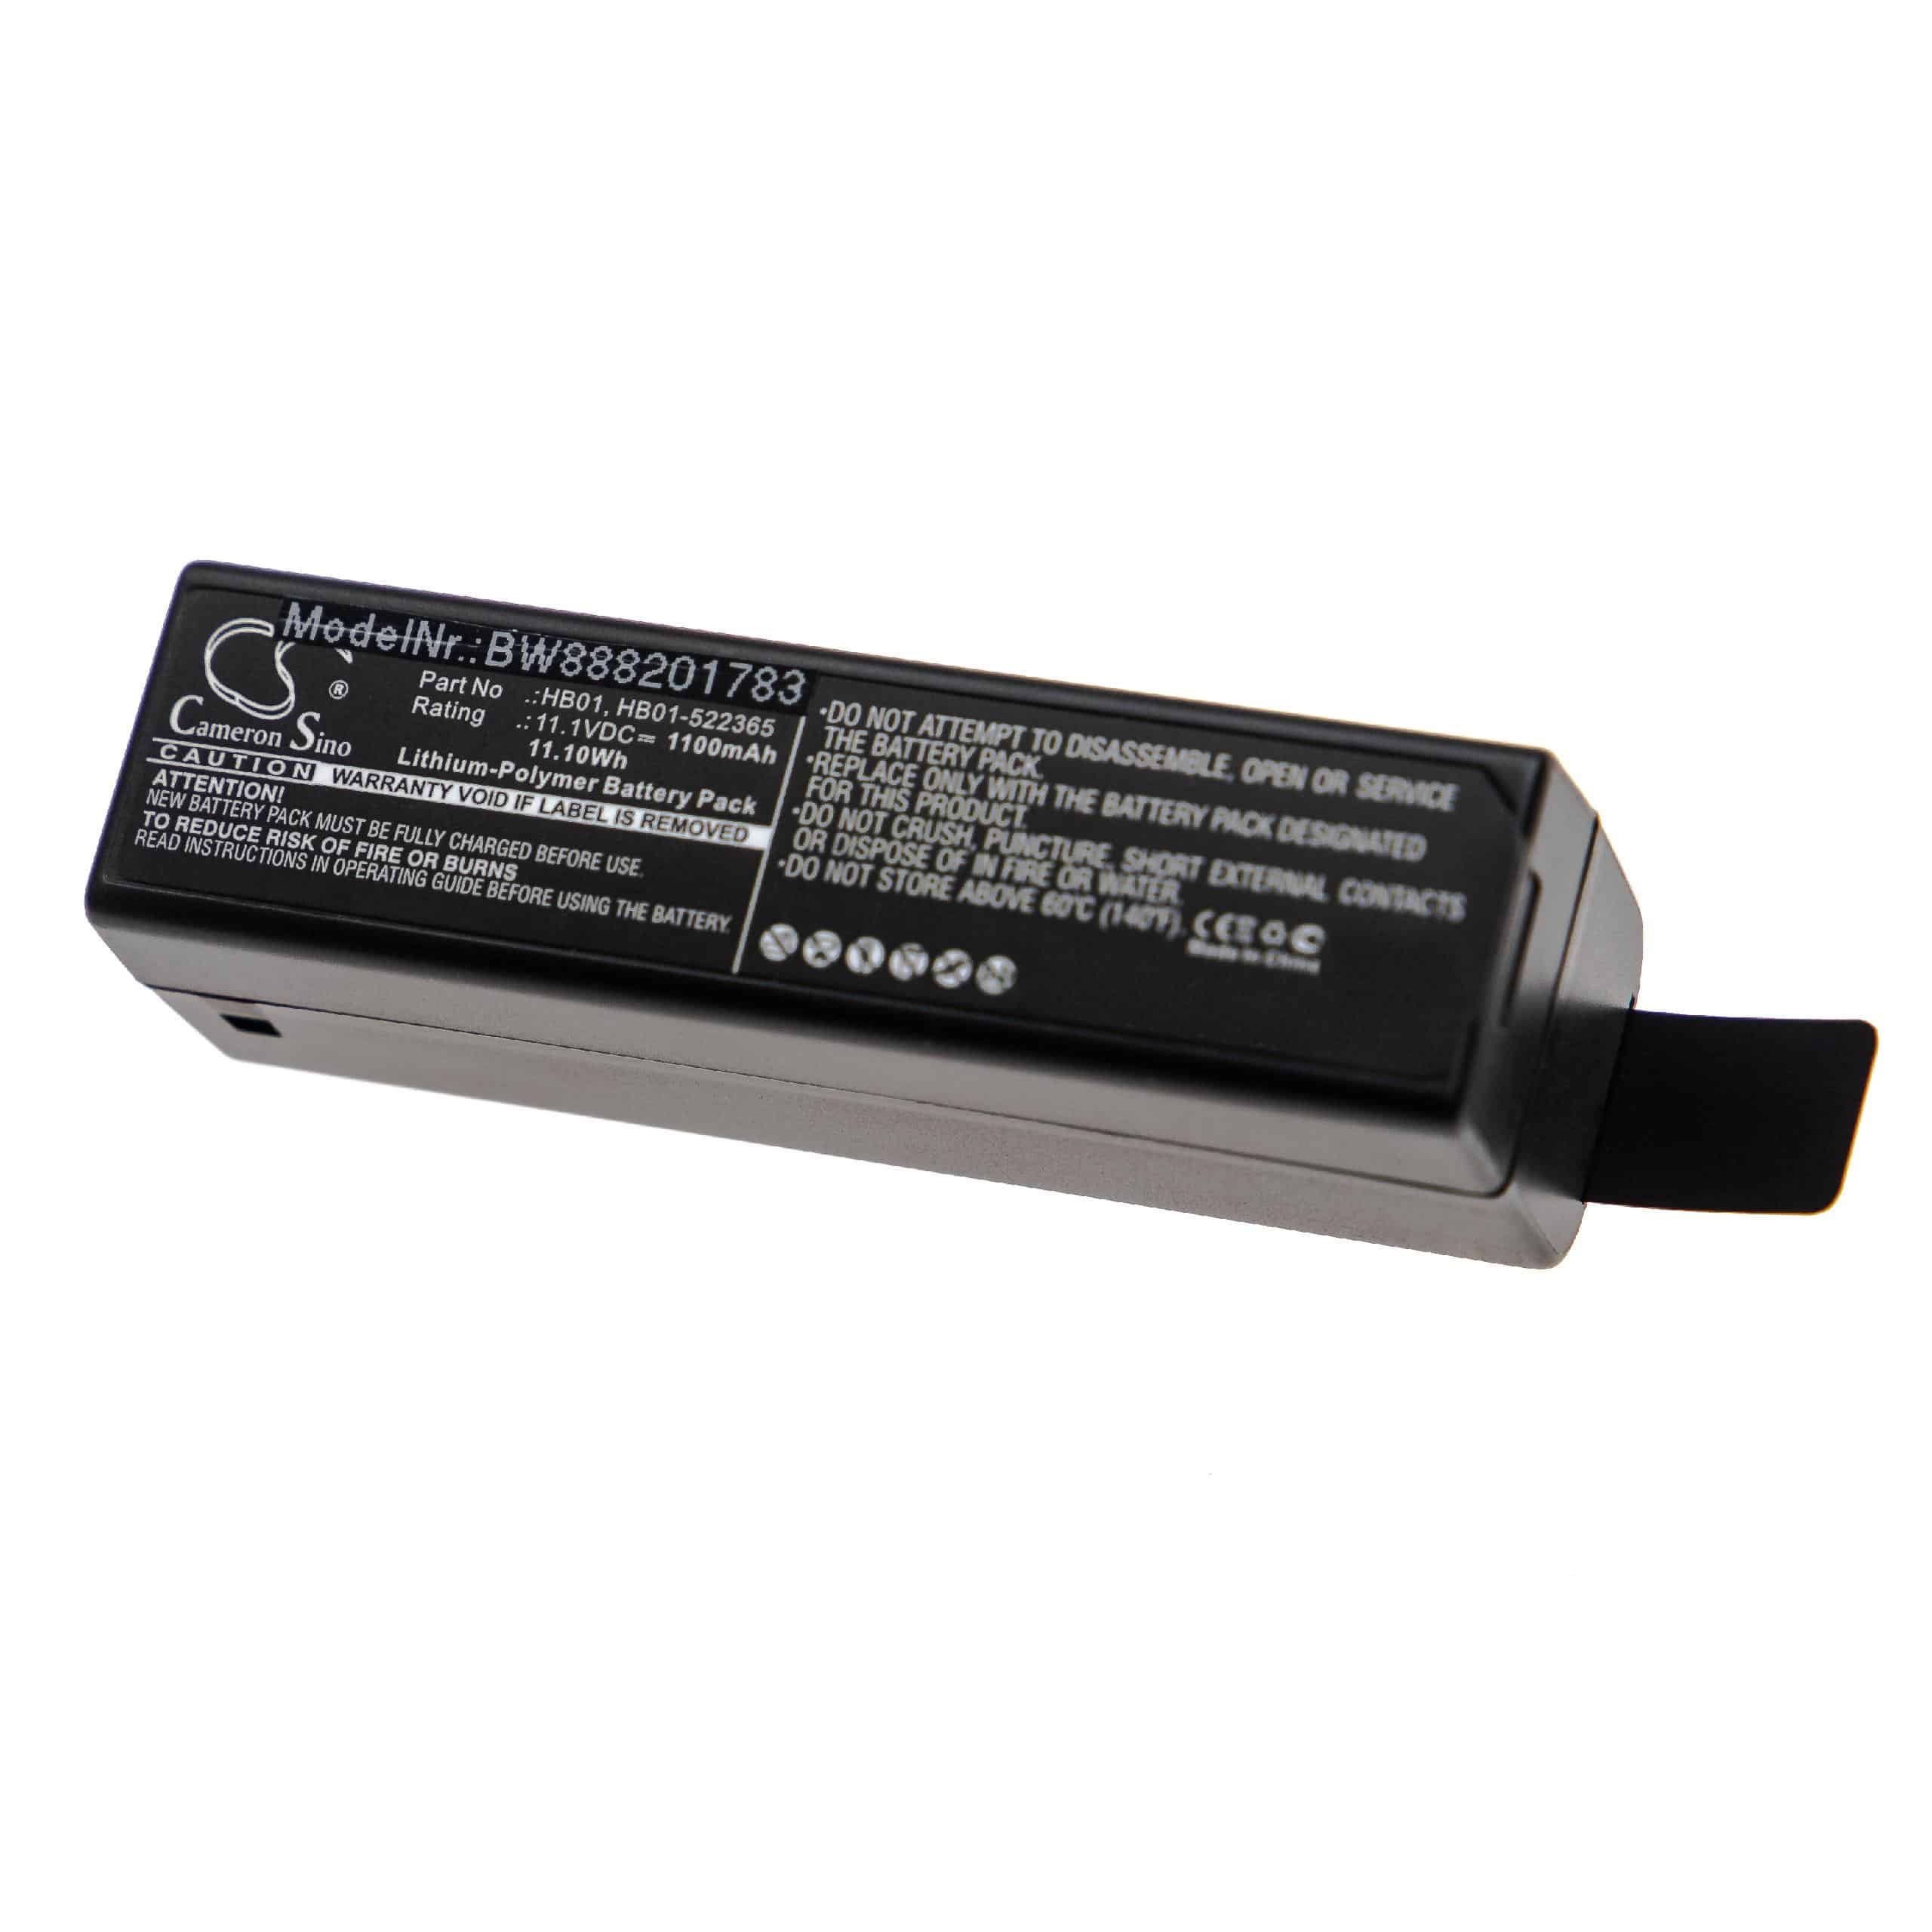 Batterie remplace DJI HB01, HB01-522365 pour appareil photo - 1100mAh 11,1V Li-polymère